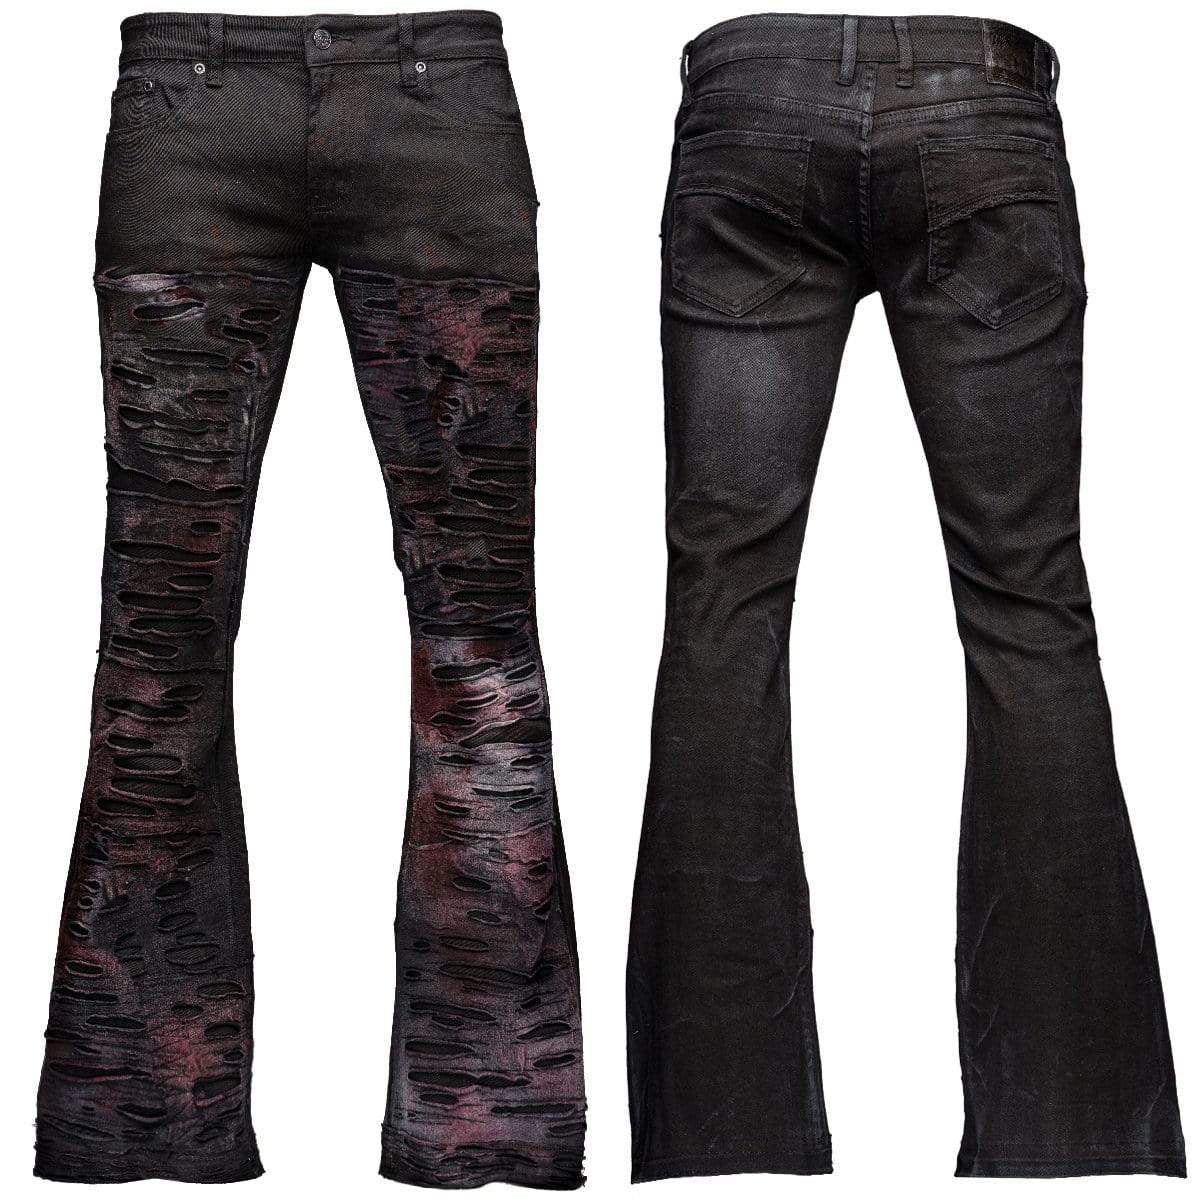 Wornstar Custom - Jeans - Suave